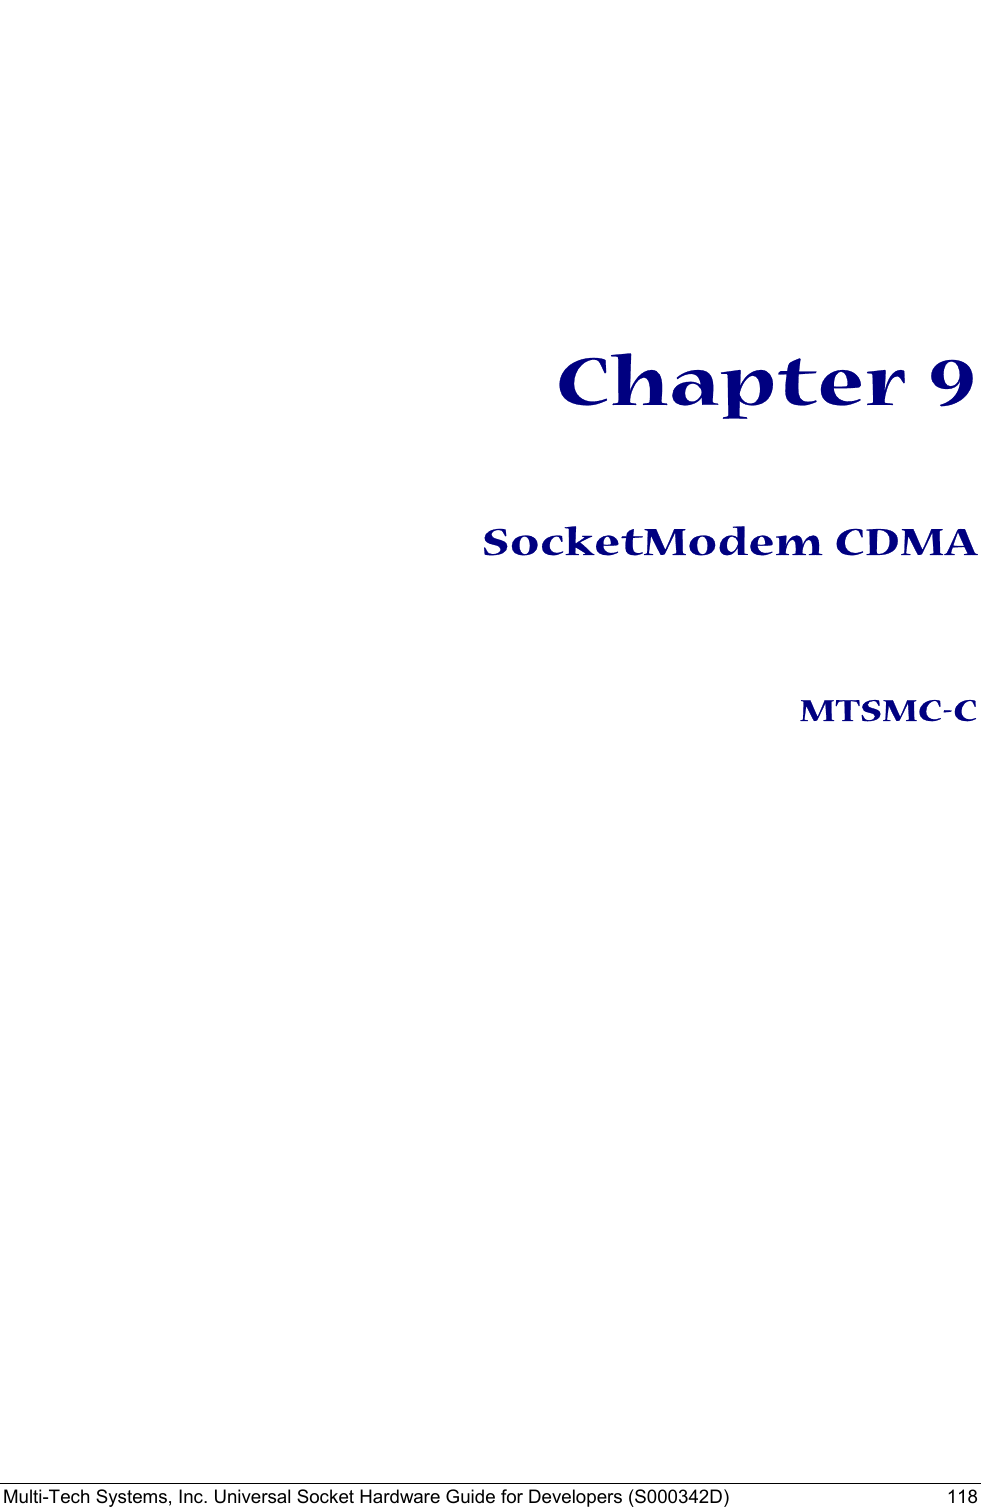  Multi-Tech Systems, Inc. Universal Socket Hardware Guide for Developers (S000342D)  118             Chapter 9    SocketModem CDMA    MTSMC-C   